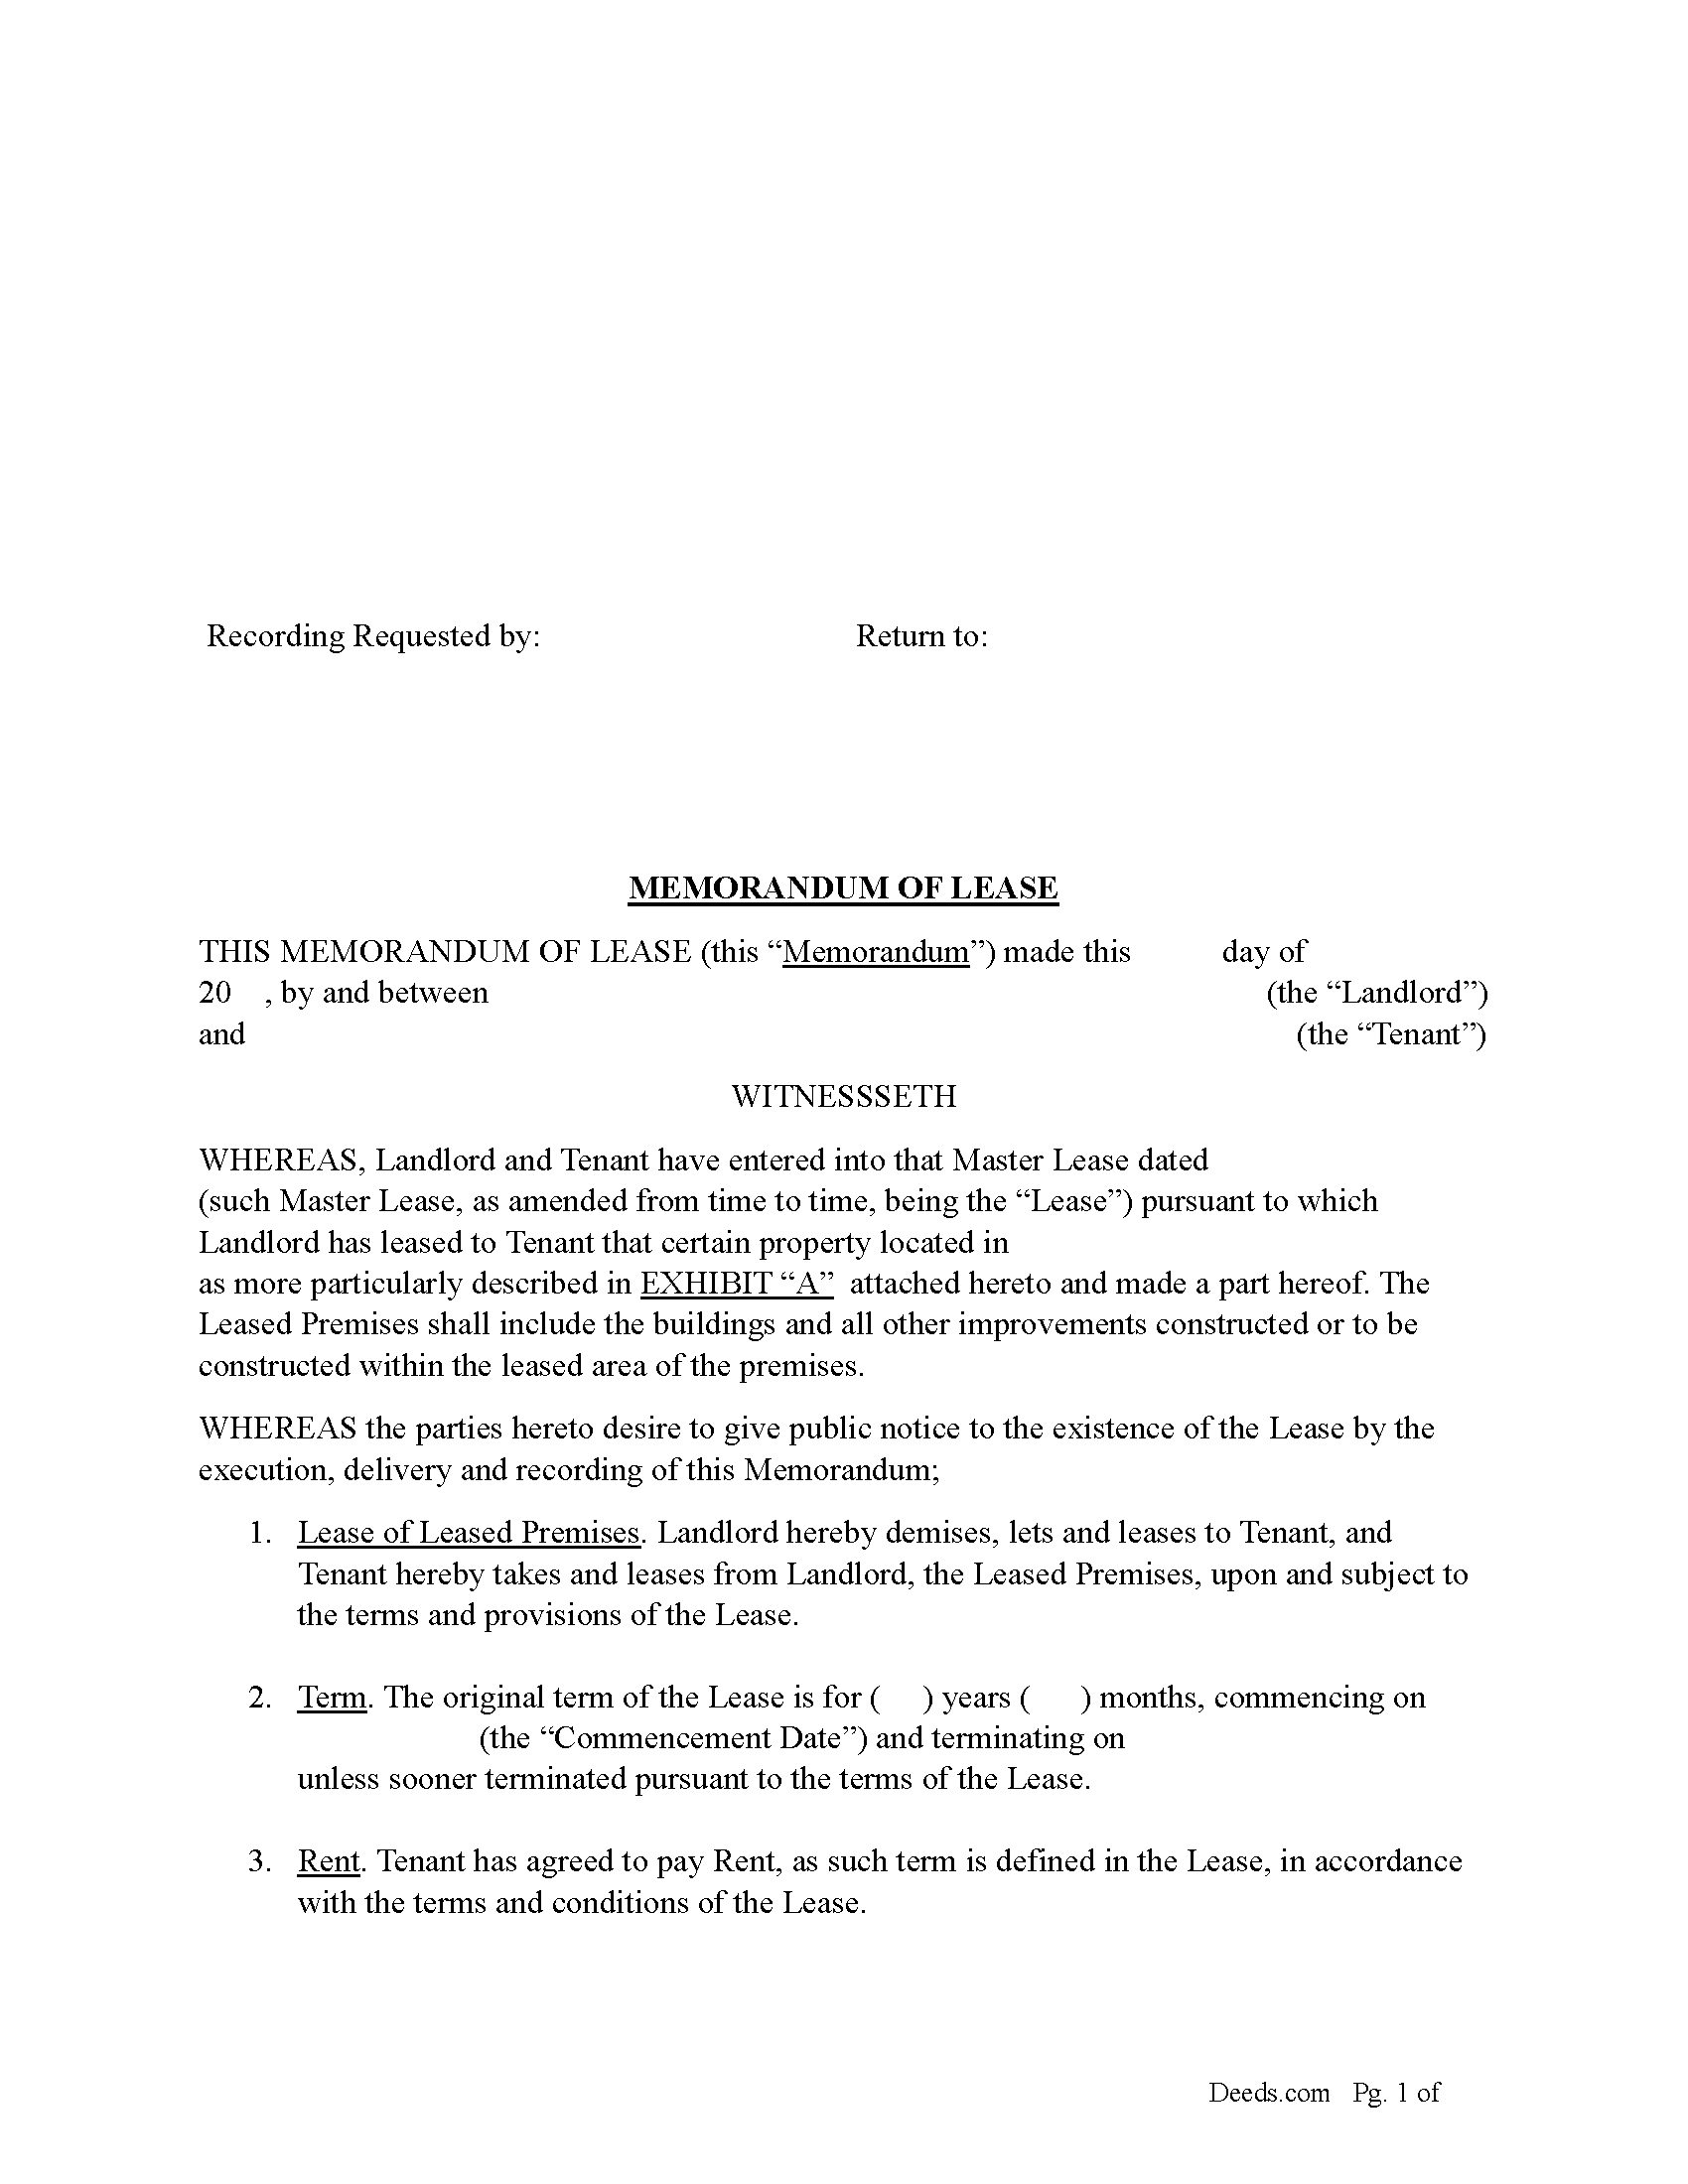 Memorandum of Lease Form